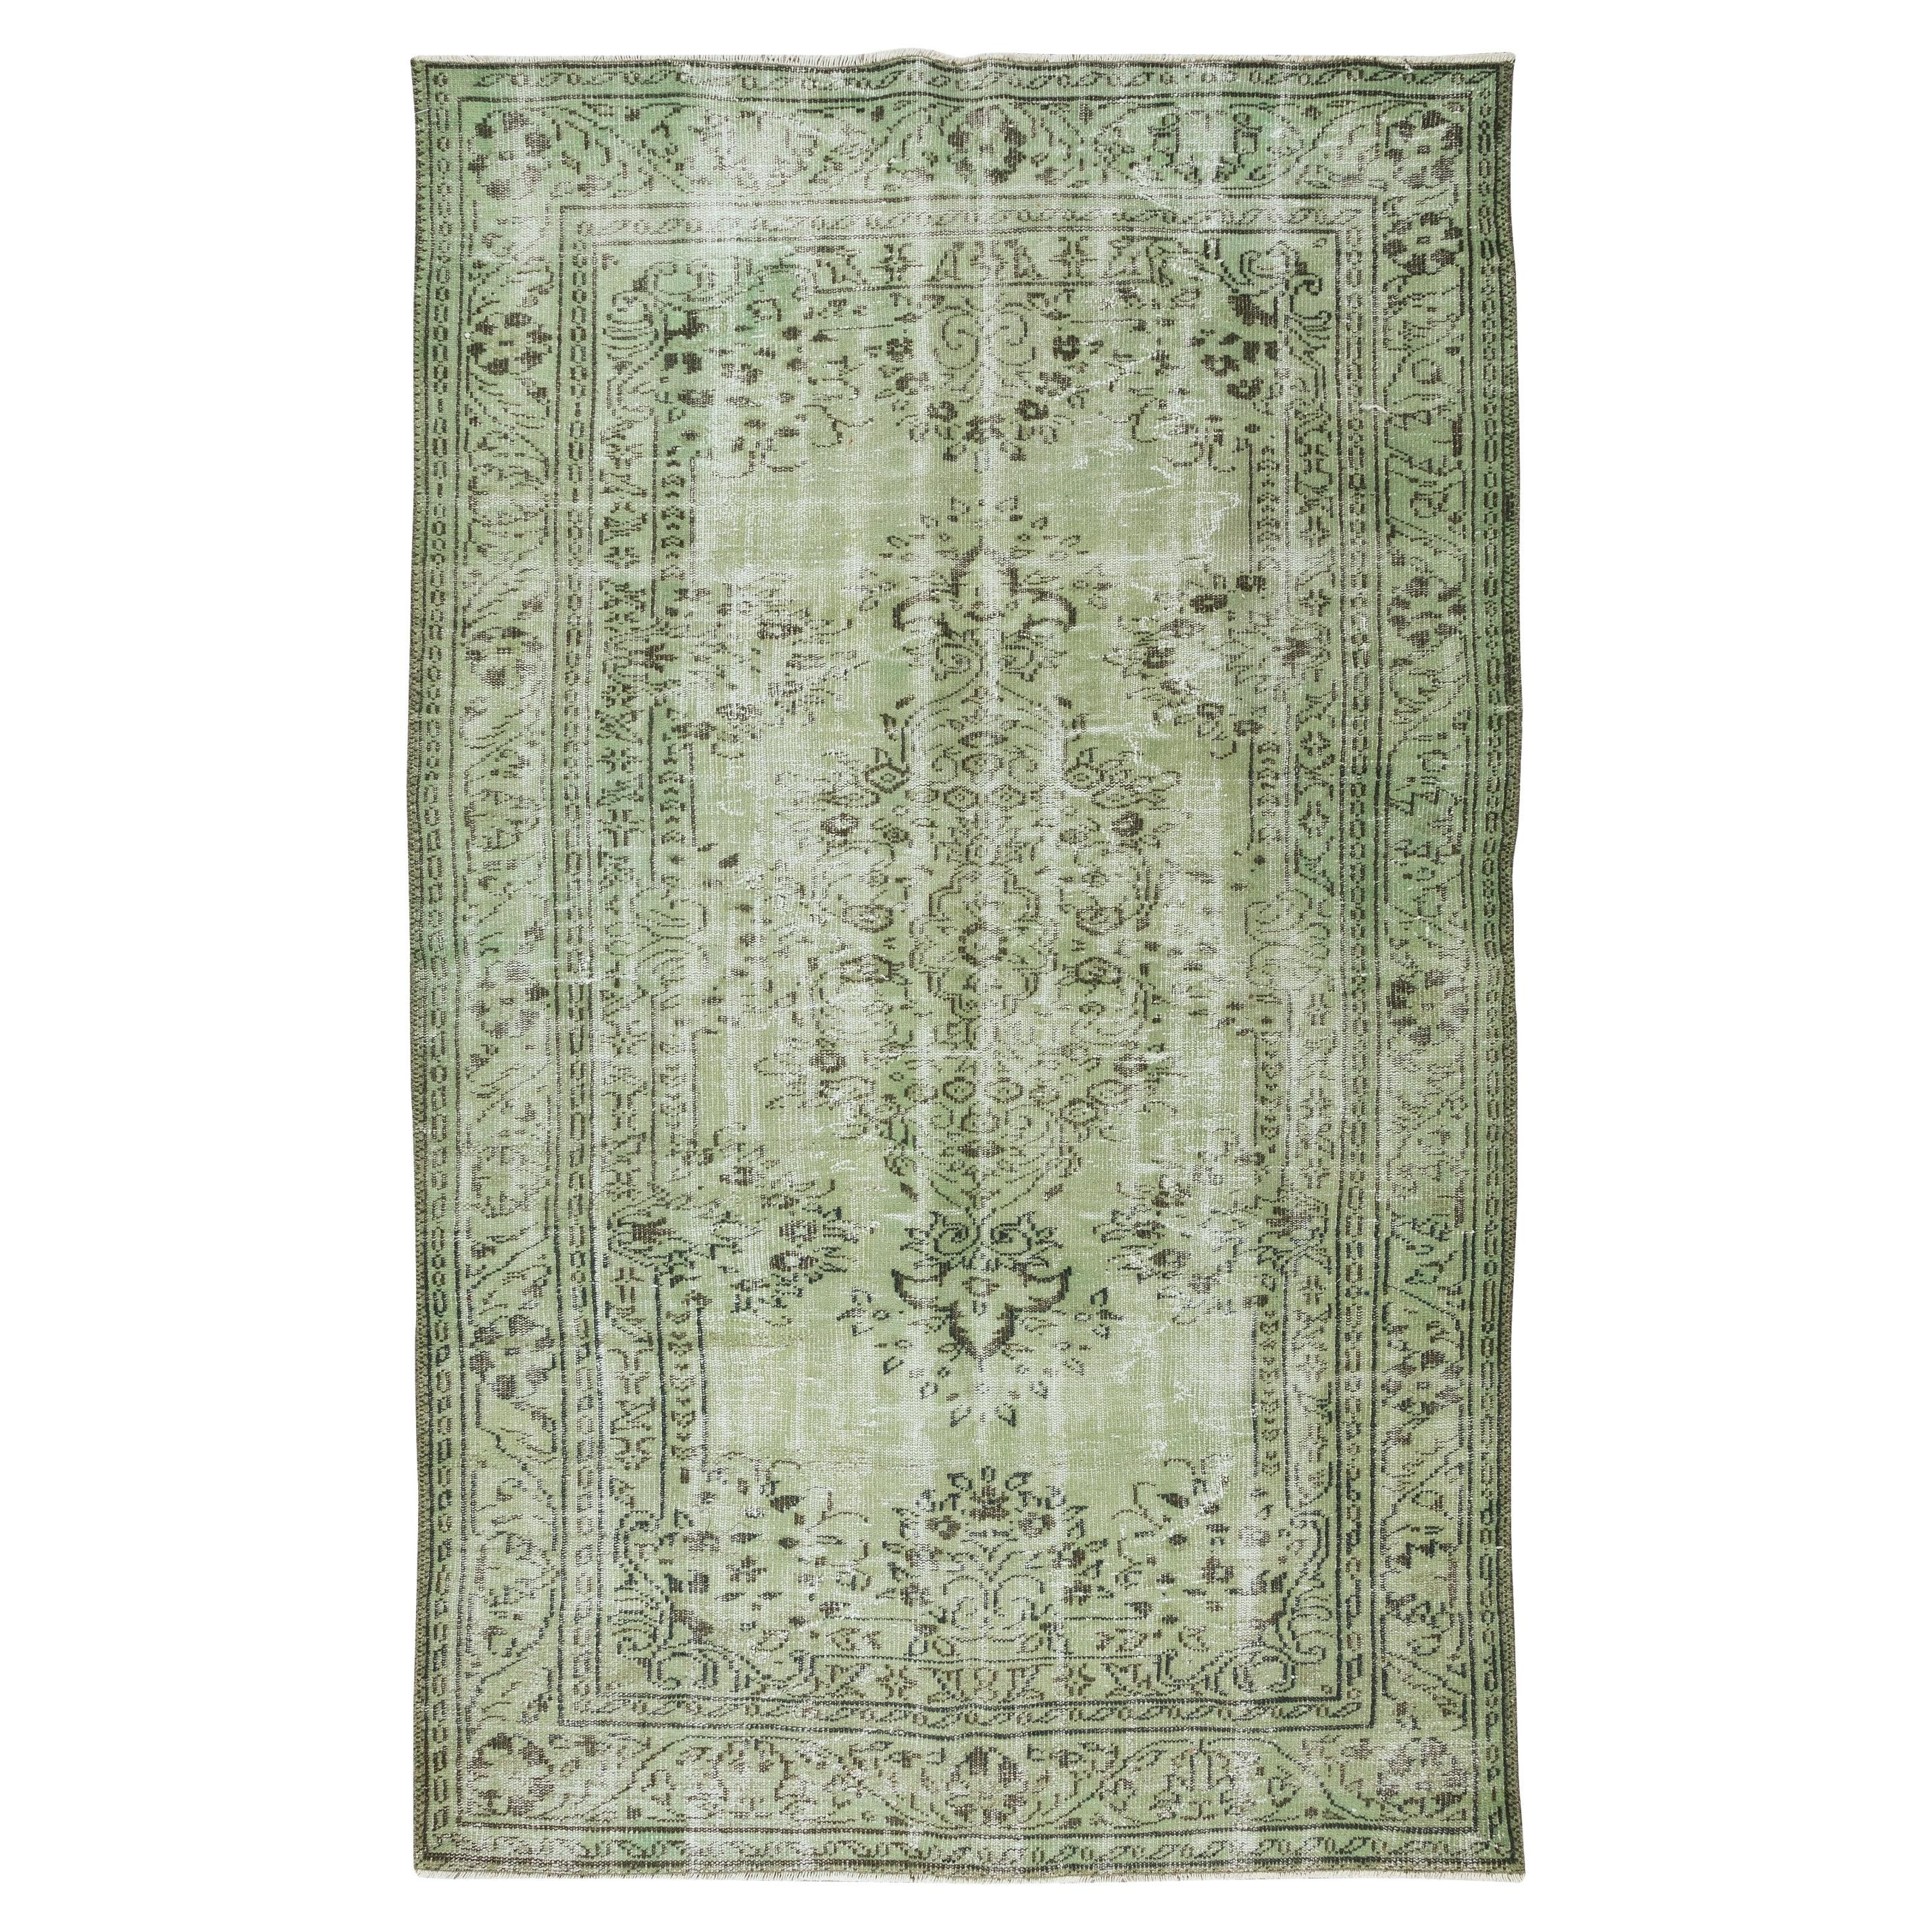 5.8x9.5 Ft Living Room Decor Rug, Light Green Turkish Handmade Carpet